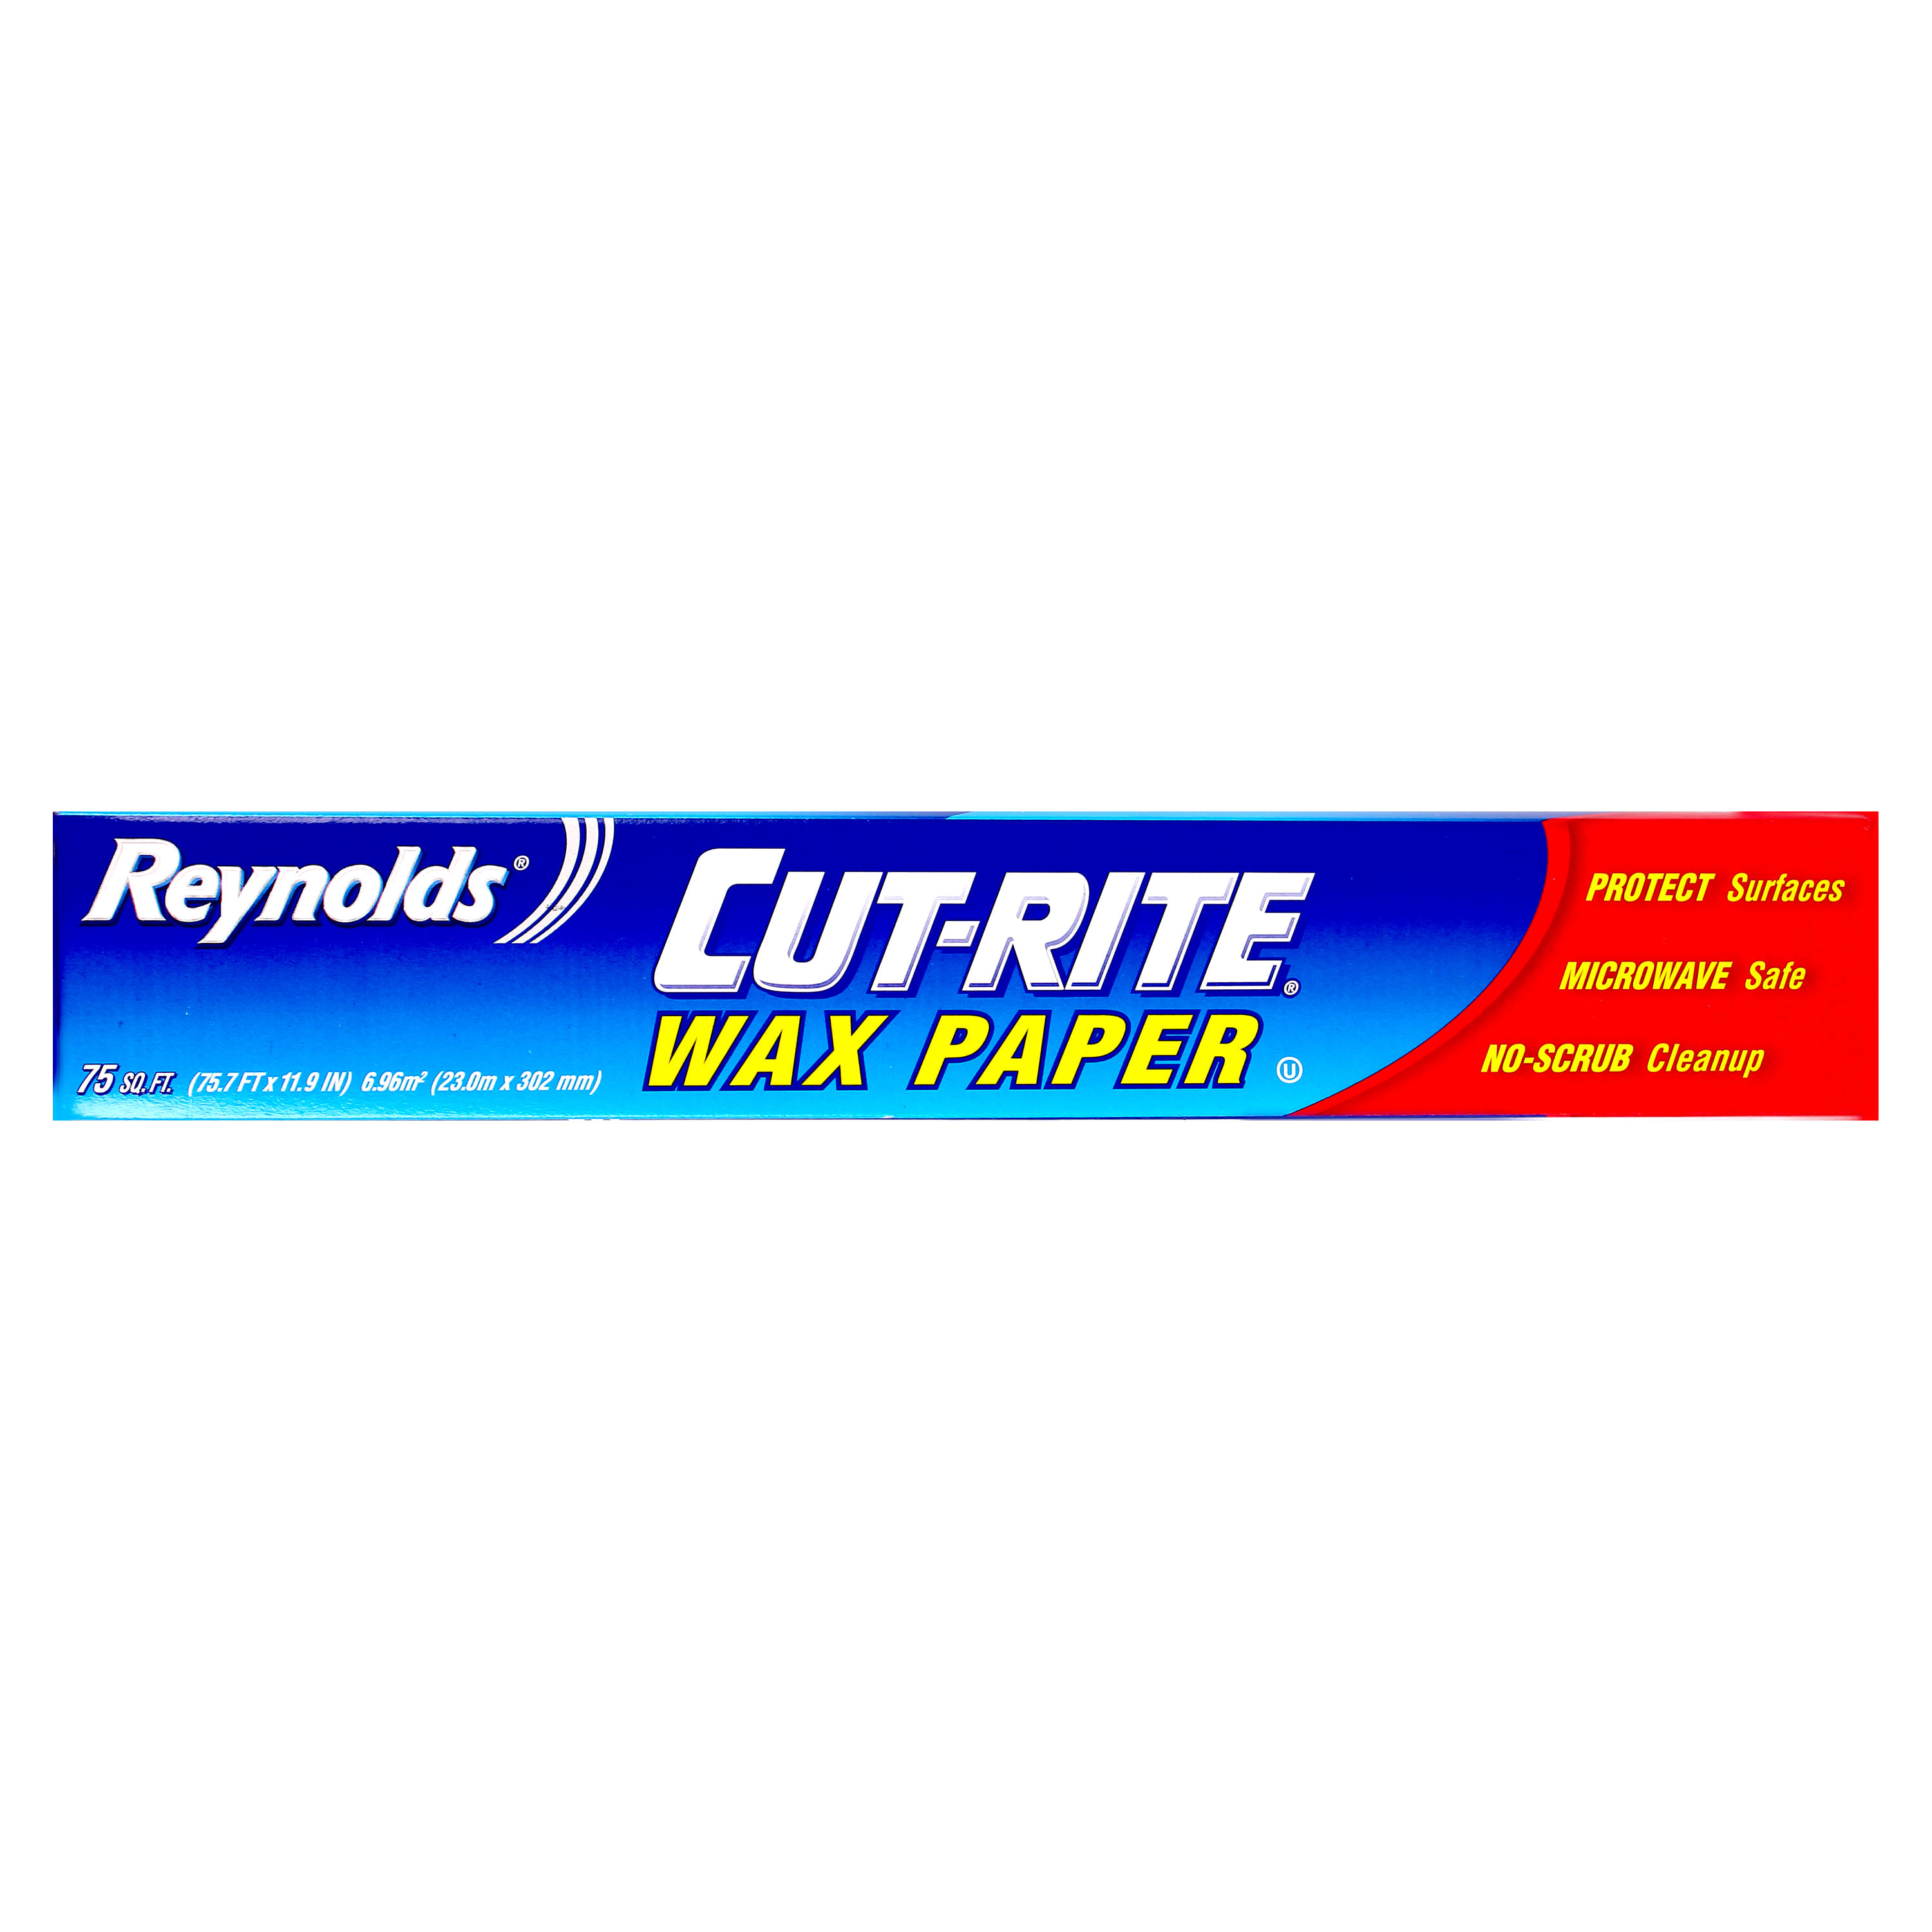 Comprar Papel Encerado Reynolds Cut Rite - 75 Pies, Walmart Guatemala -  Maxi Despensa